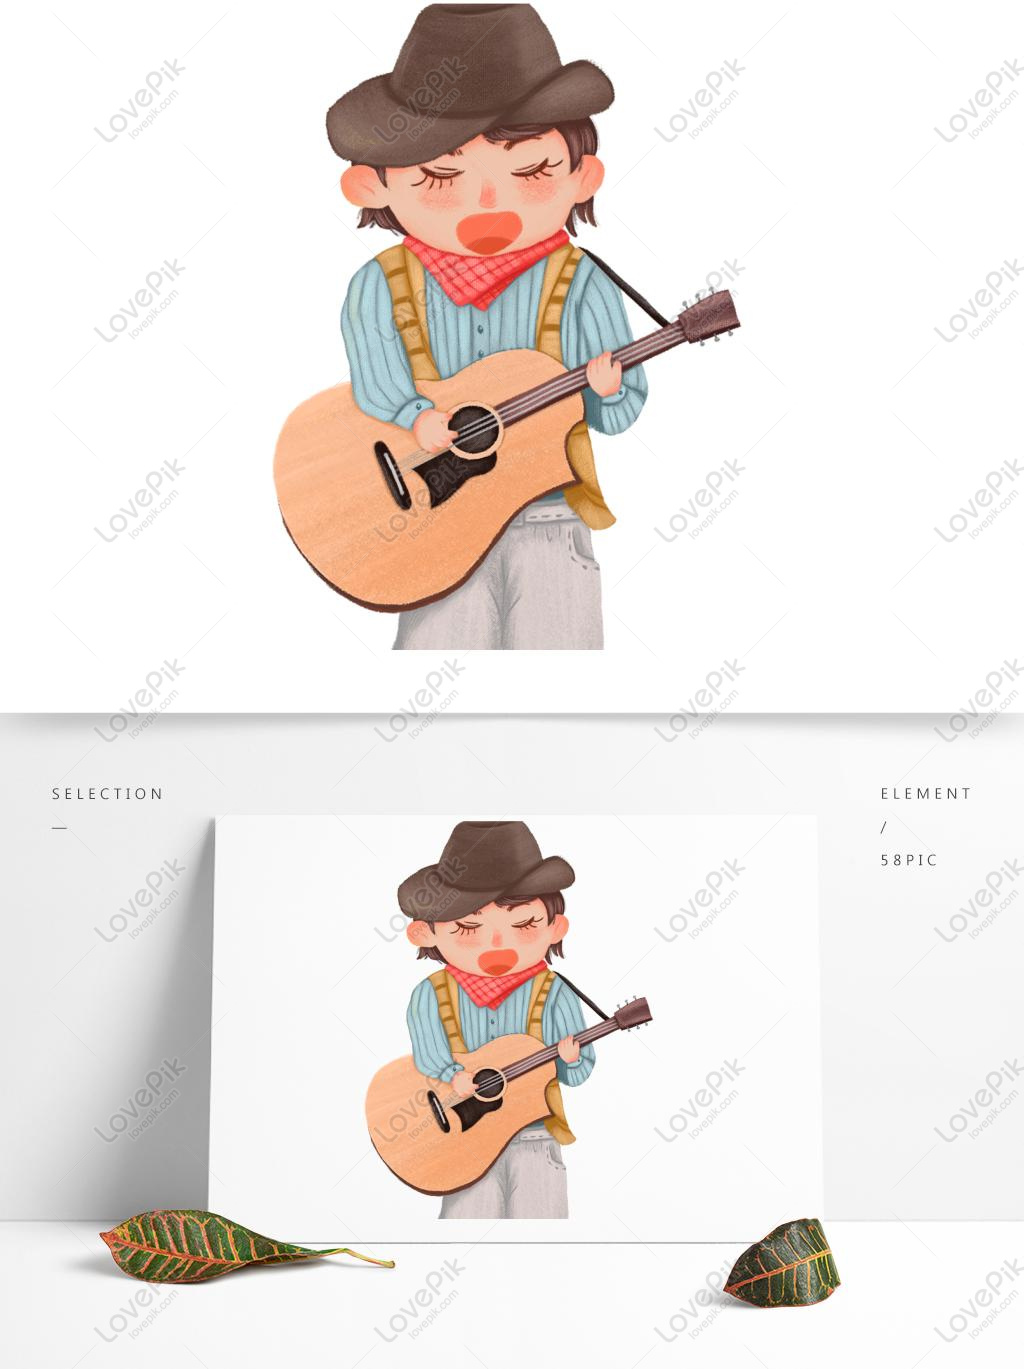 Hand Drawn Cartoon Boy Playing A Guitar Original Element PNG Transparent  Background PSD images free download_1369 × 1024 px - Lovepik